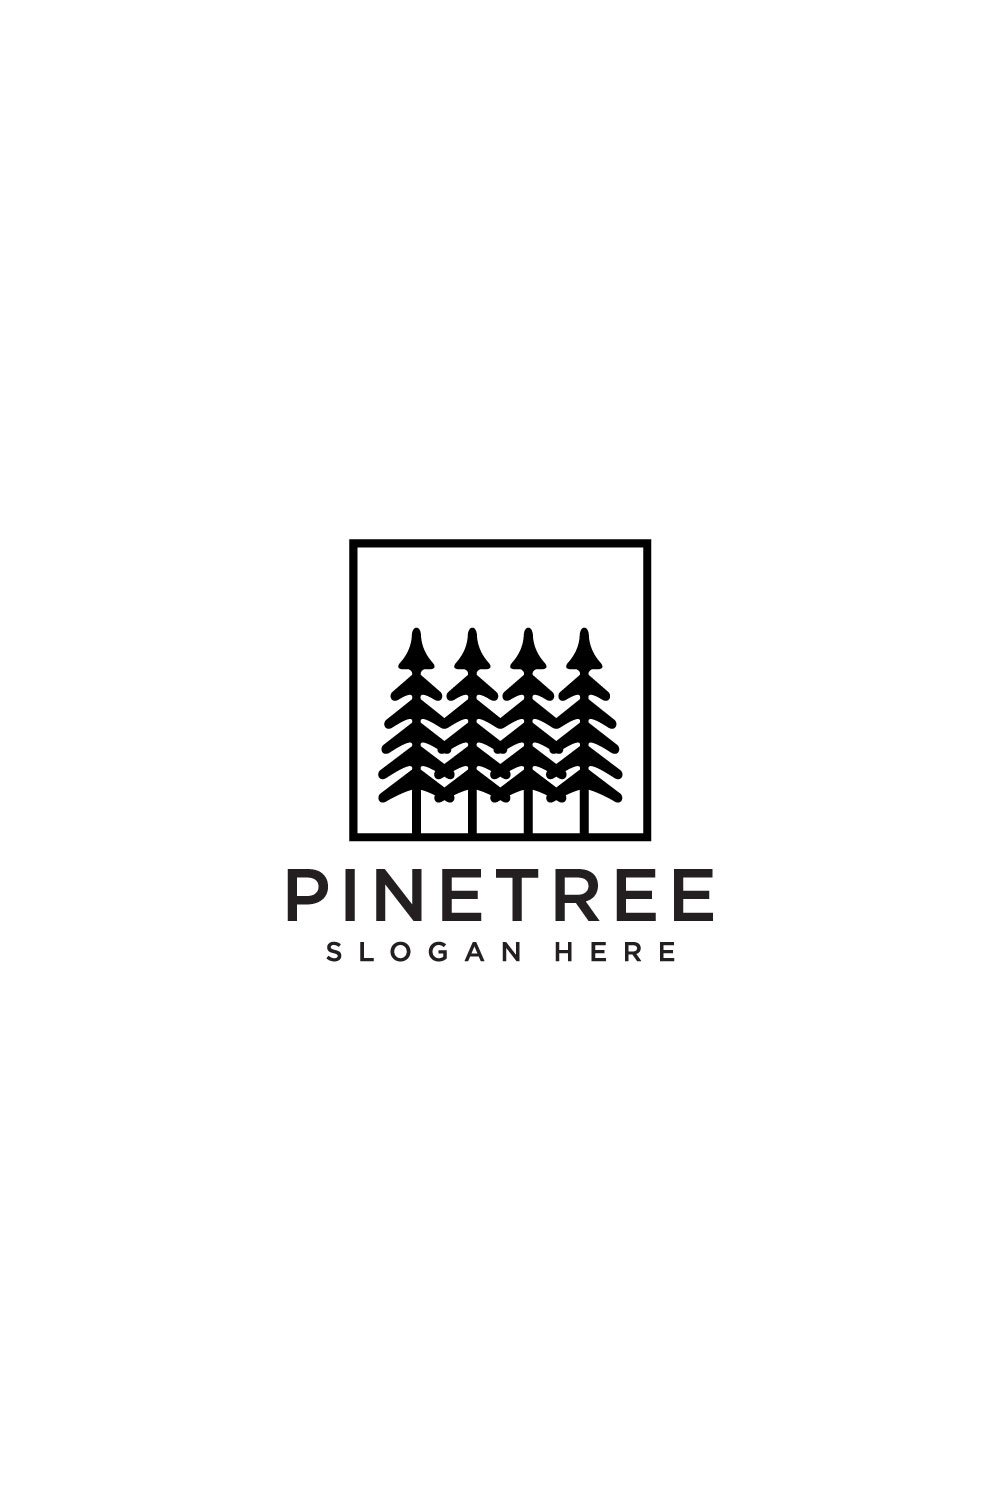 pine tree logo vector design template pinterest preview image.